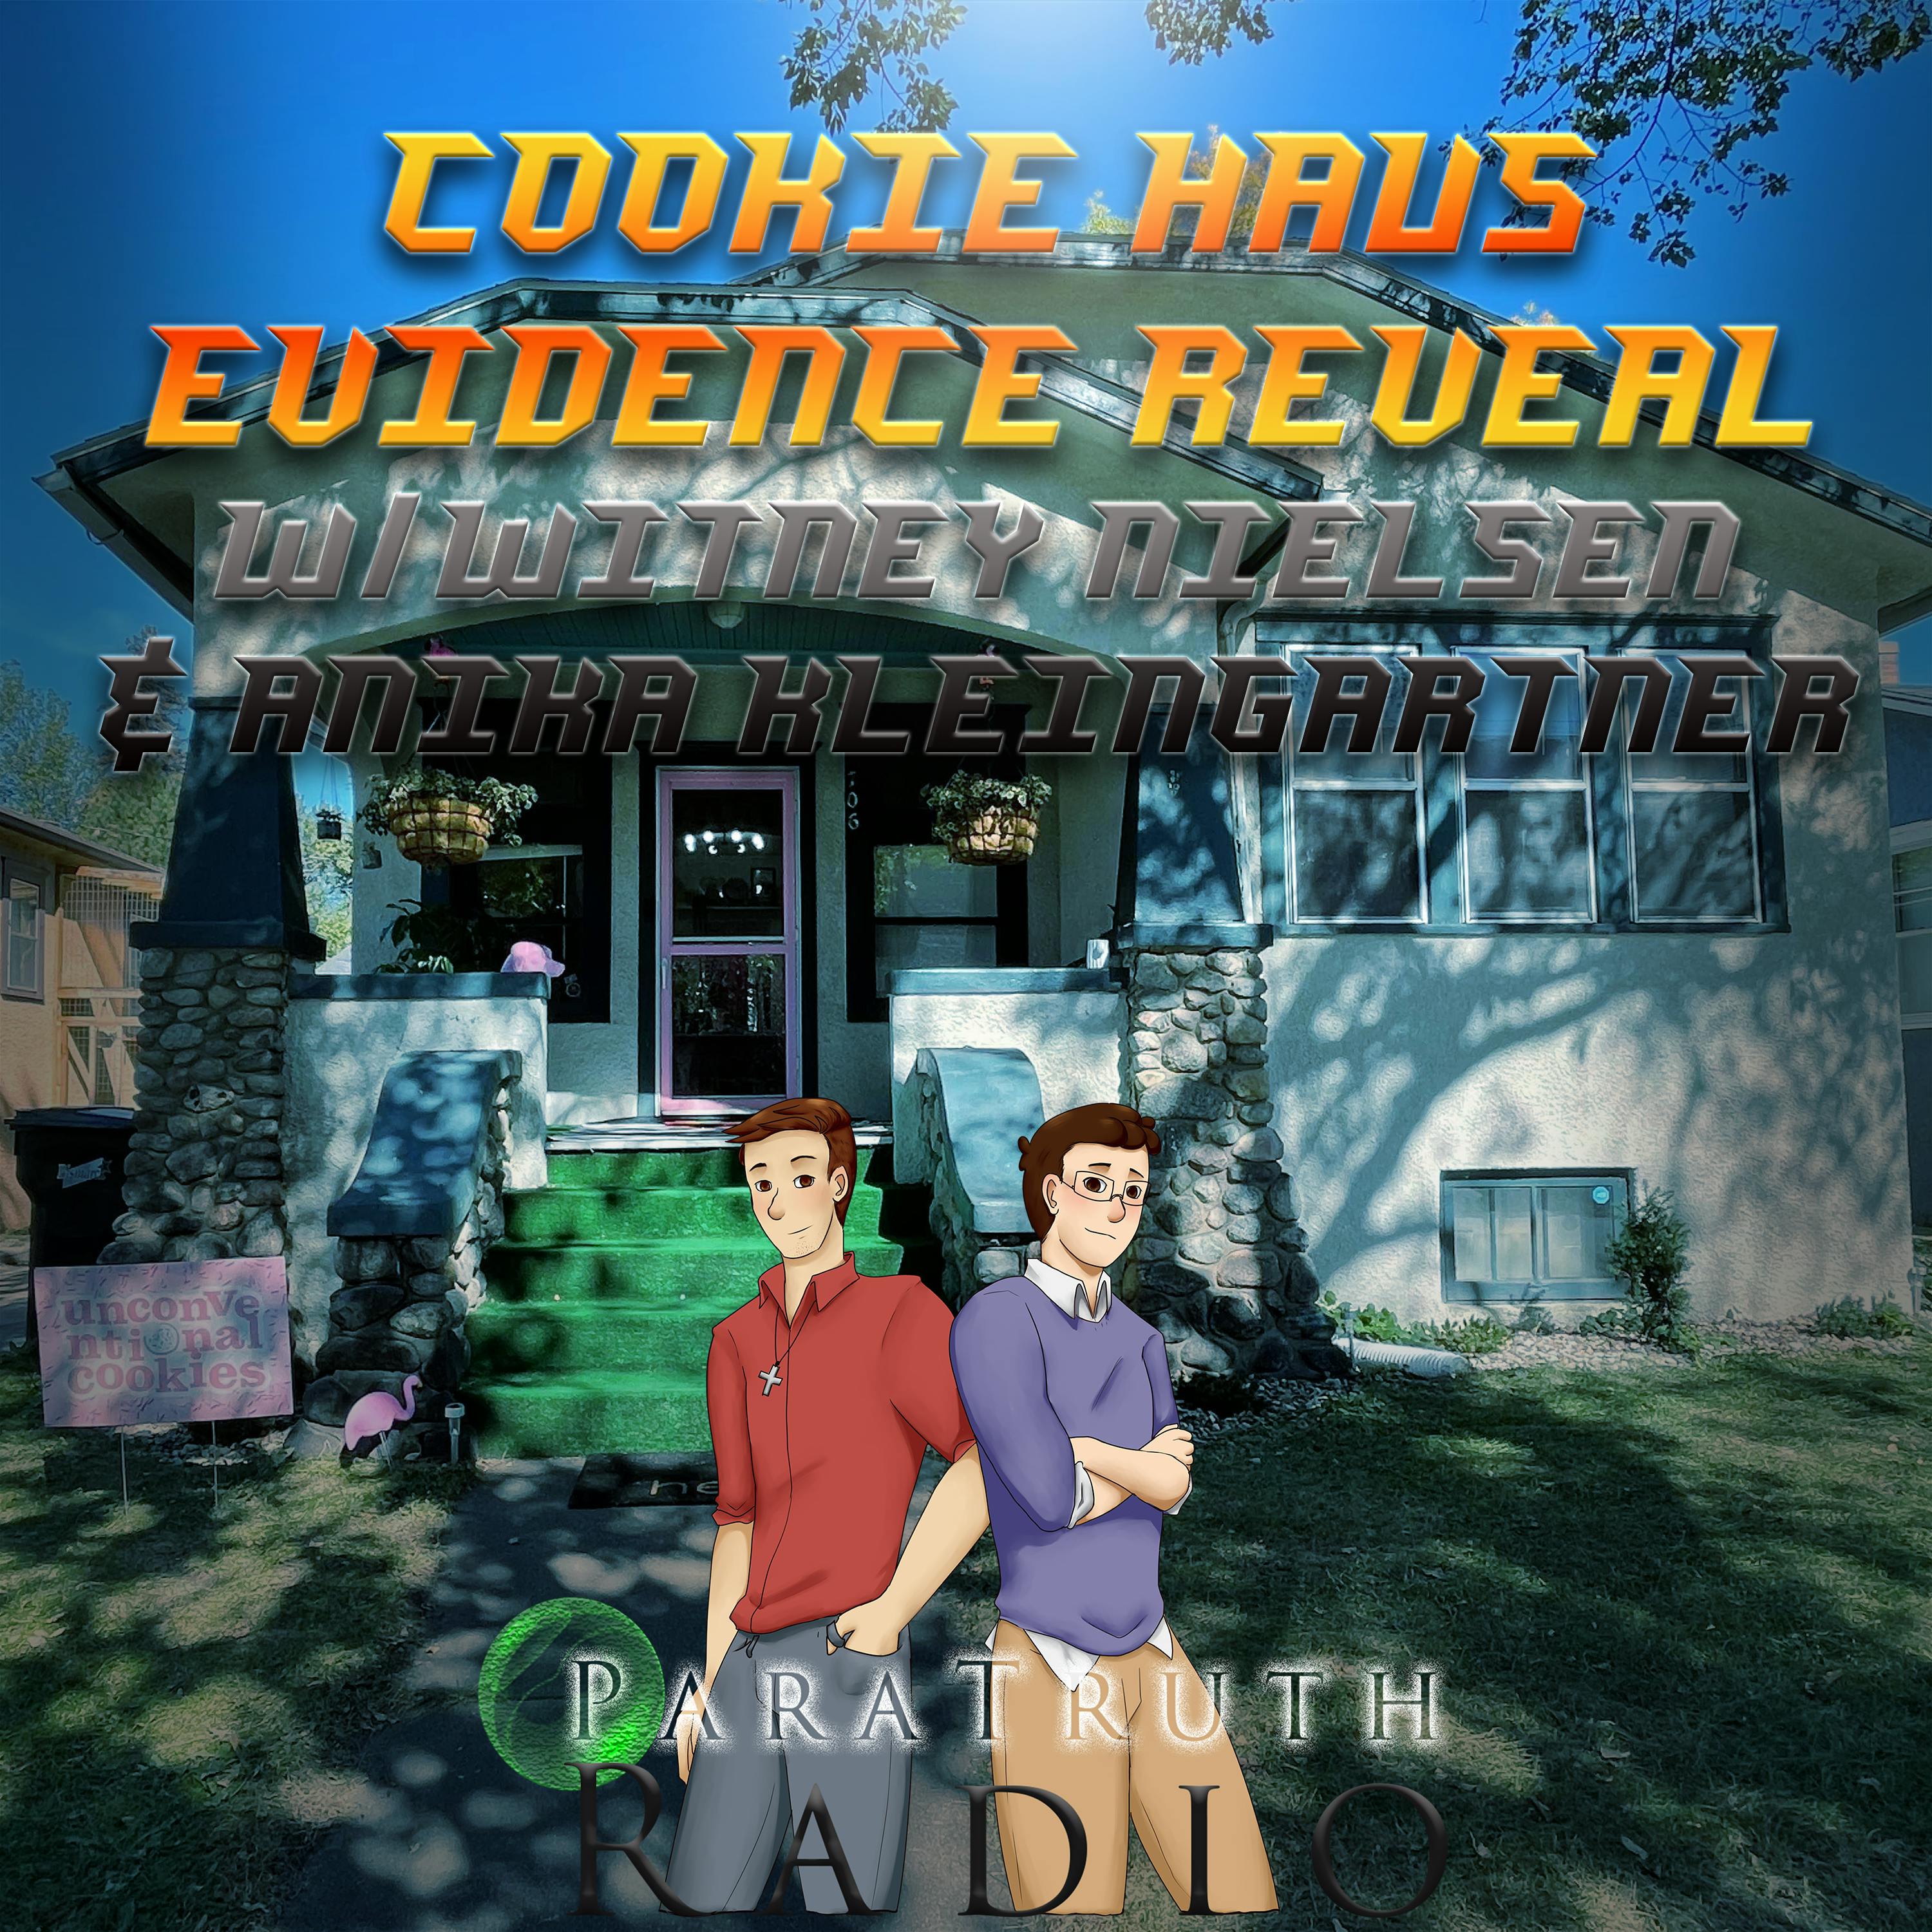 Cookie Haus Evidence Reveal w/Witney Nielsen and Anika Kleingartner